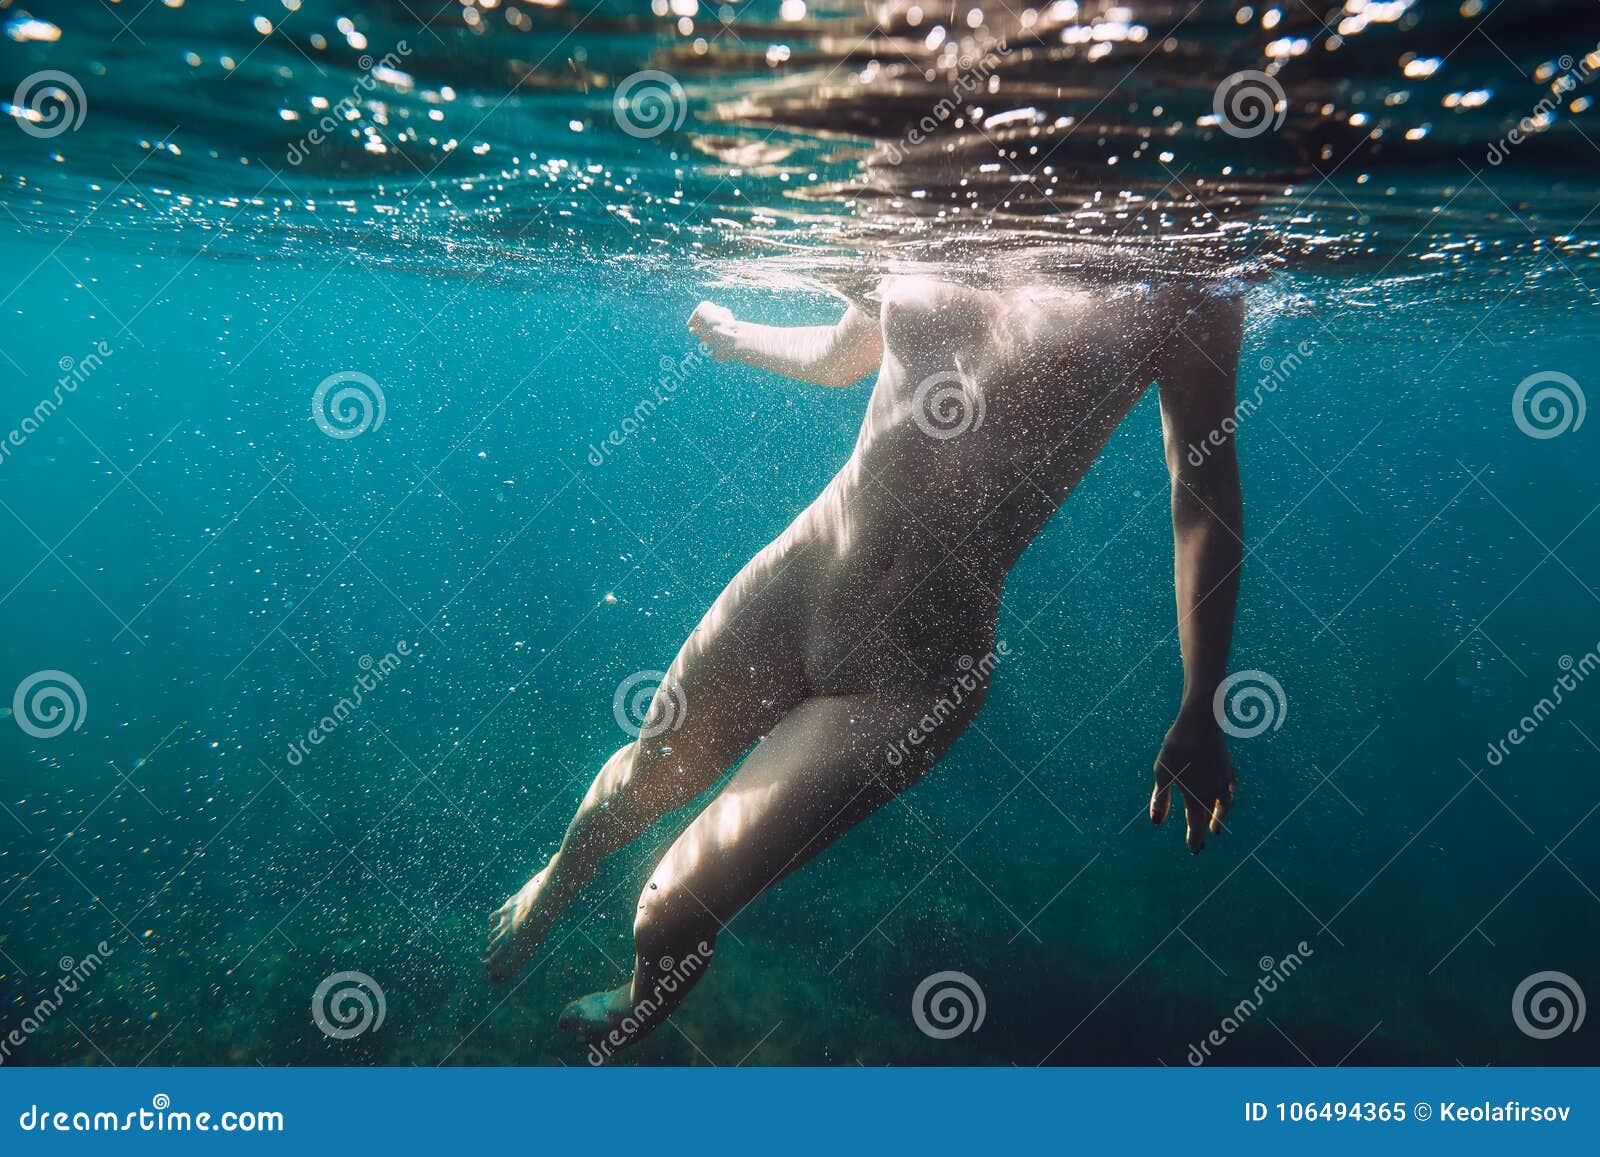 alli cook add photo girls swimming nude underwater